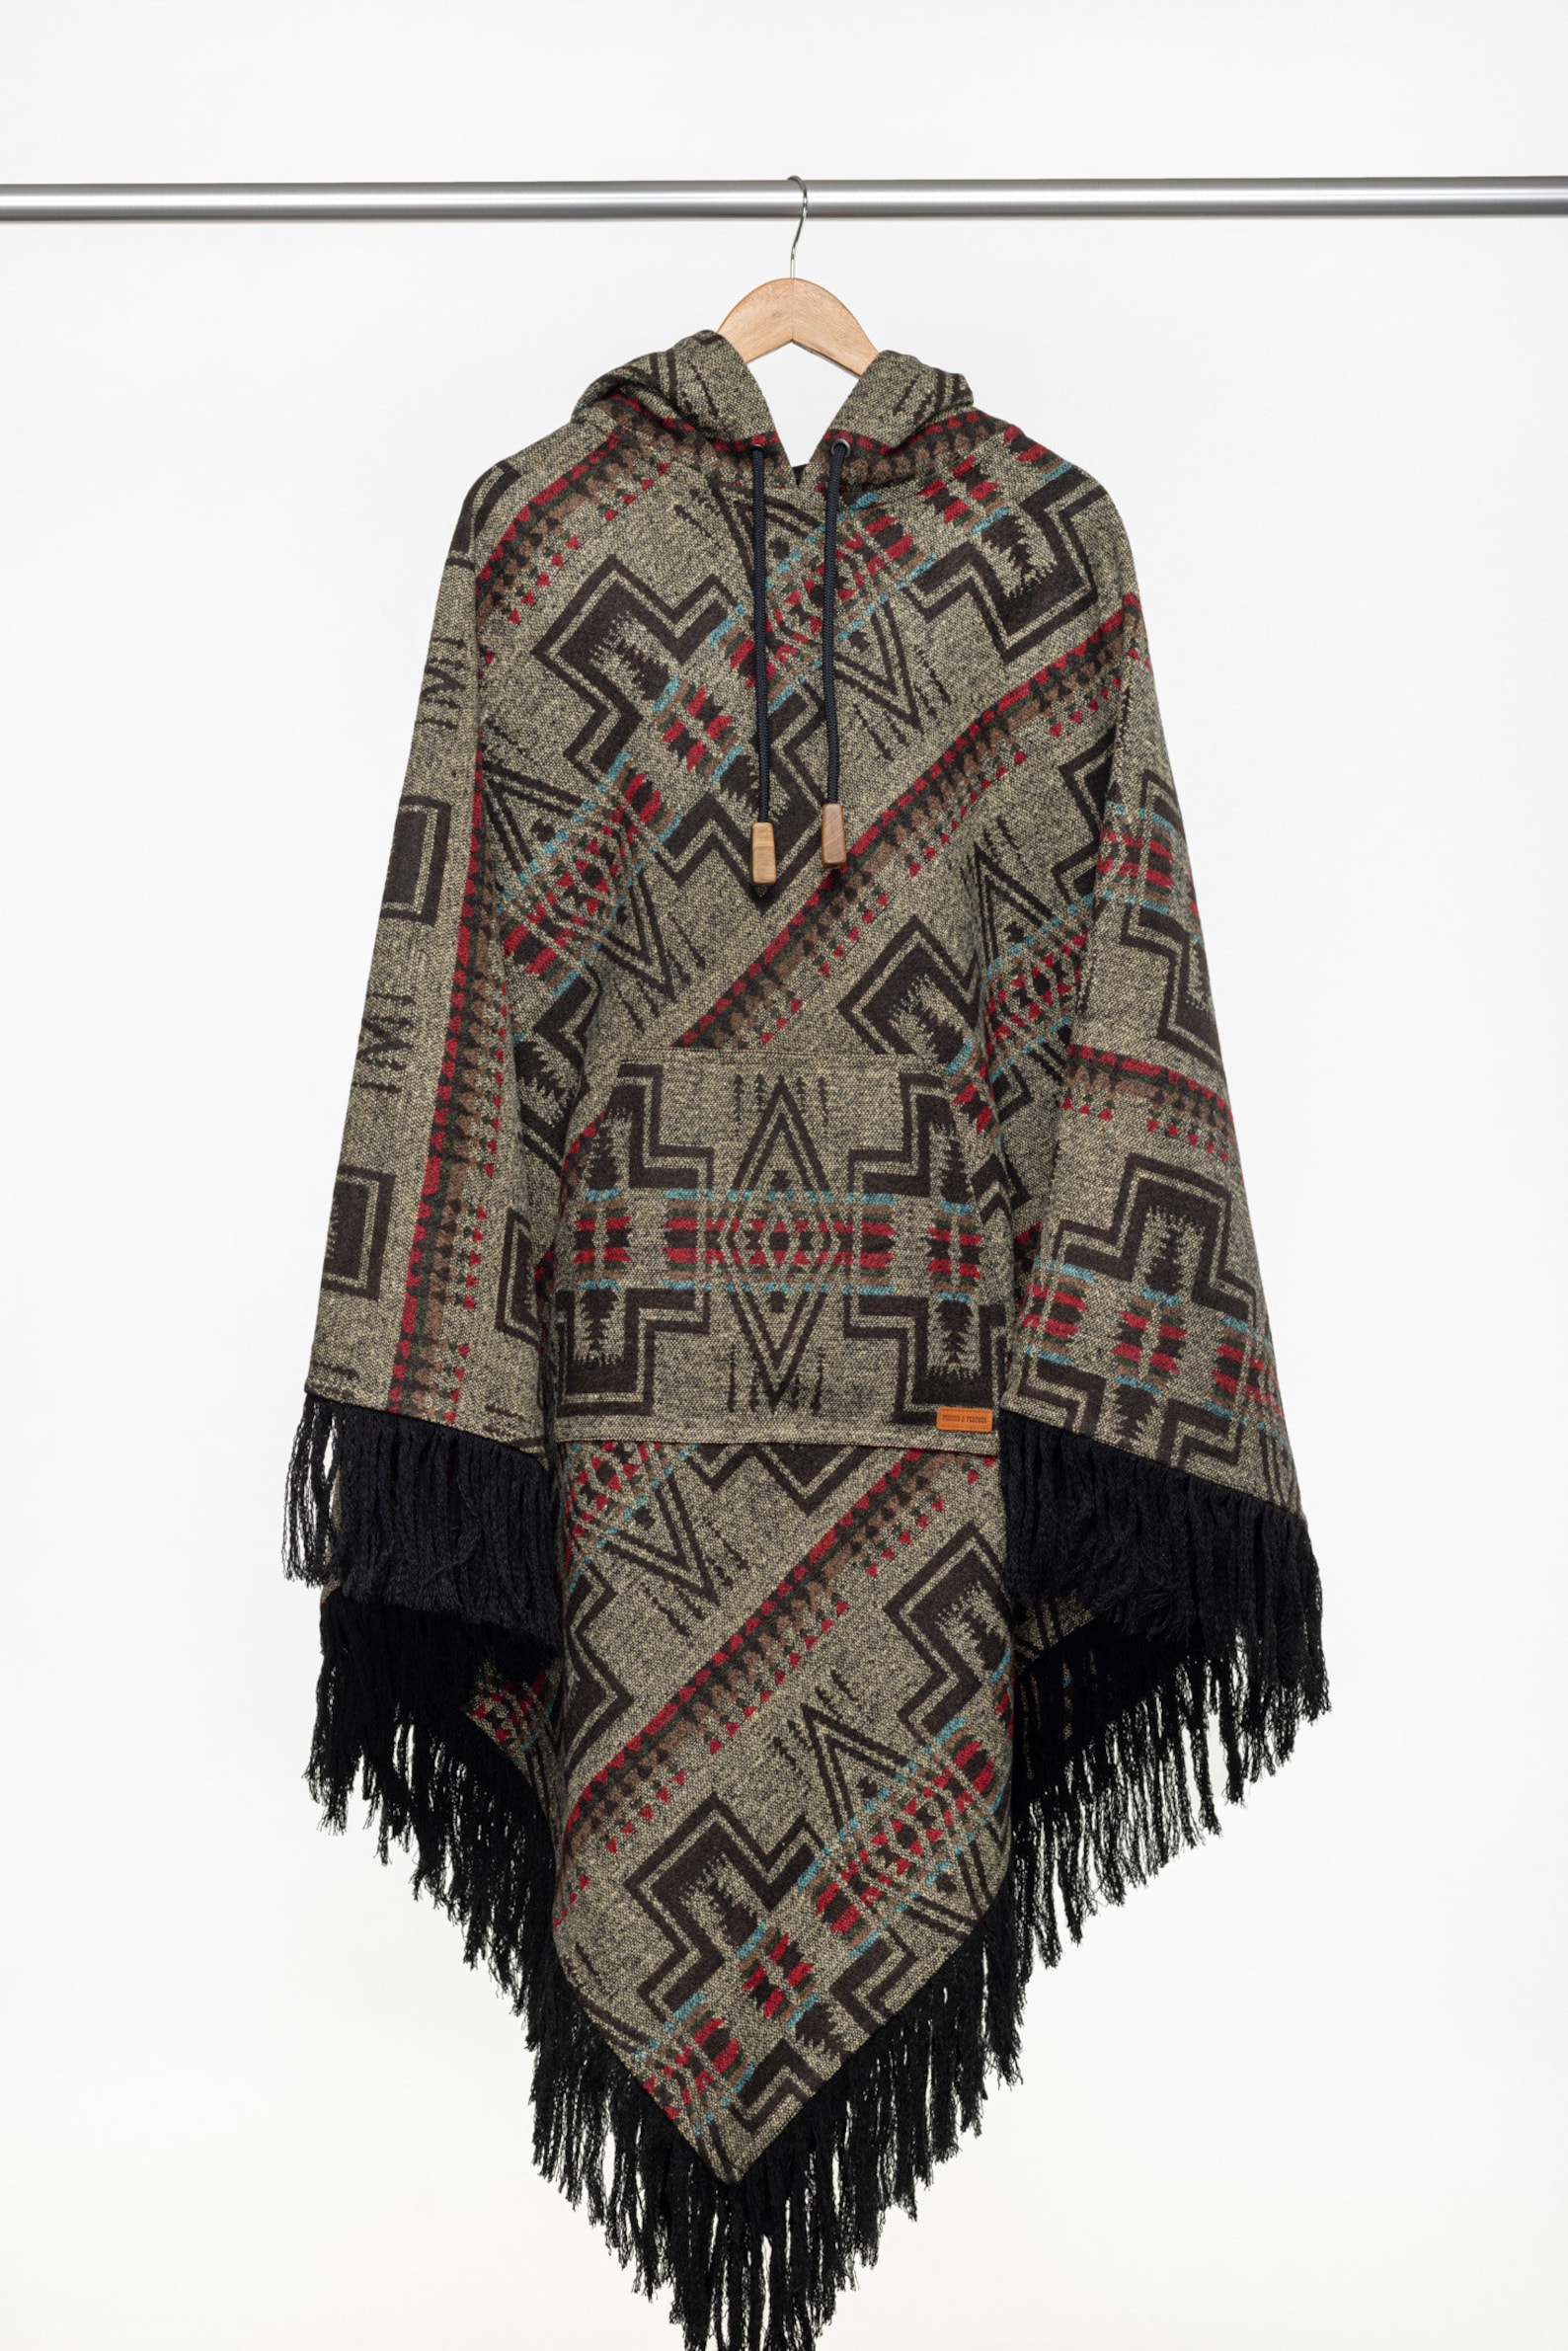 Mens poncho with hood Mens poncho blanket Navajo inspired | Etsy